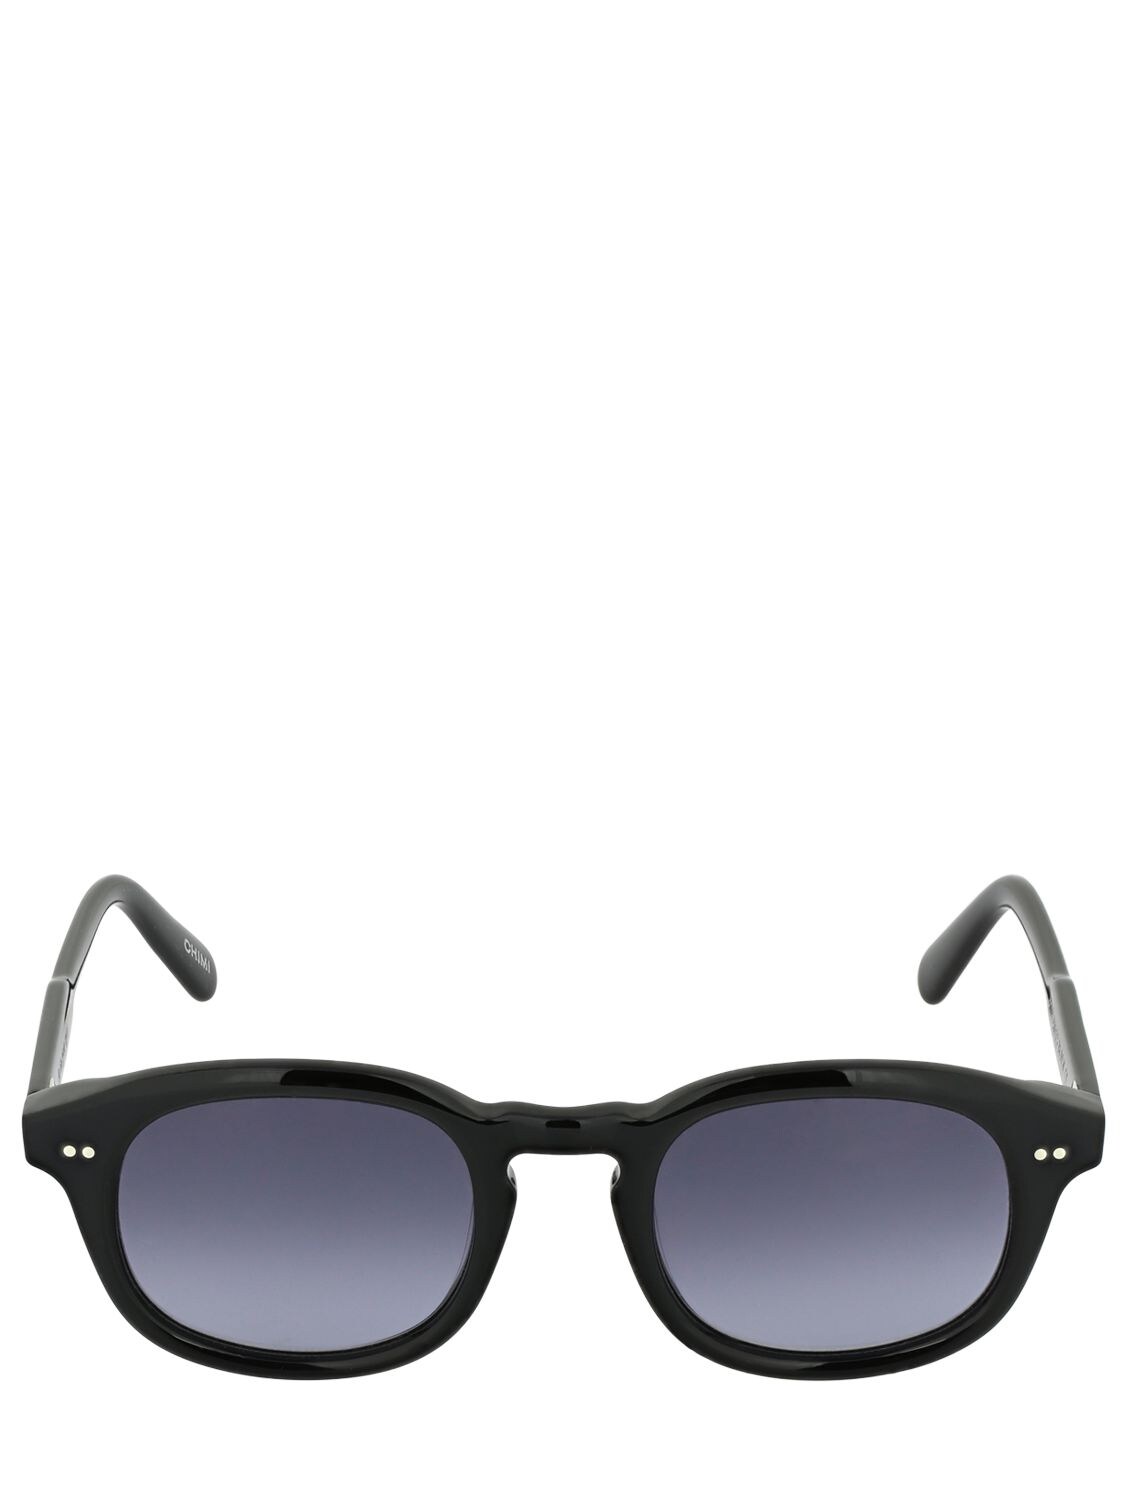 Chimi 102 Black Round Acetate Sunglasses In Black,grey